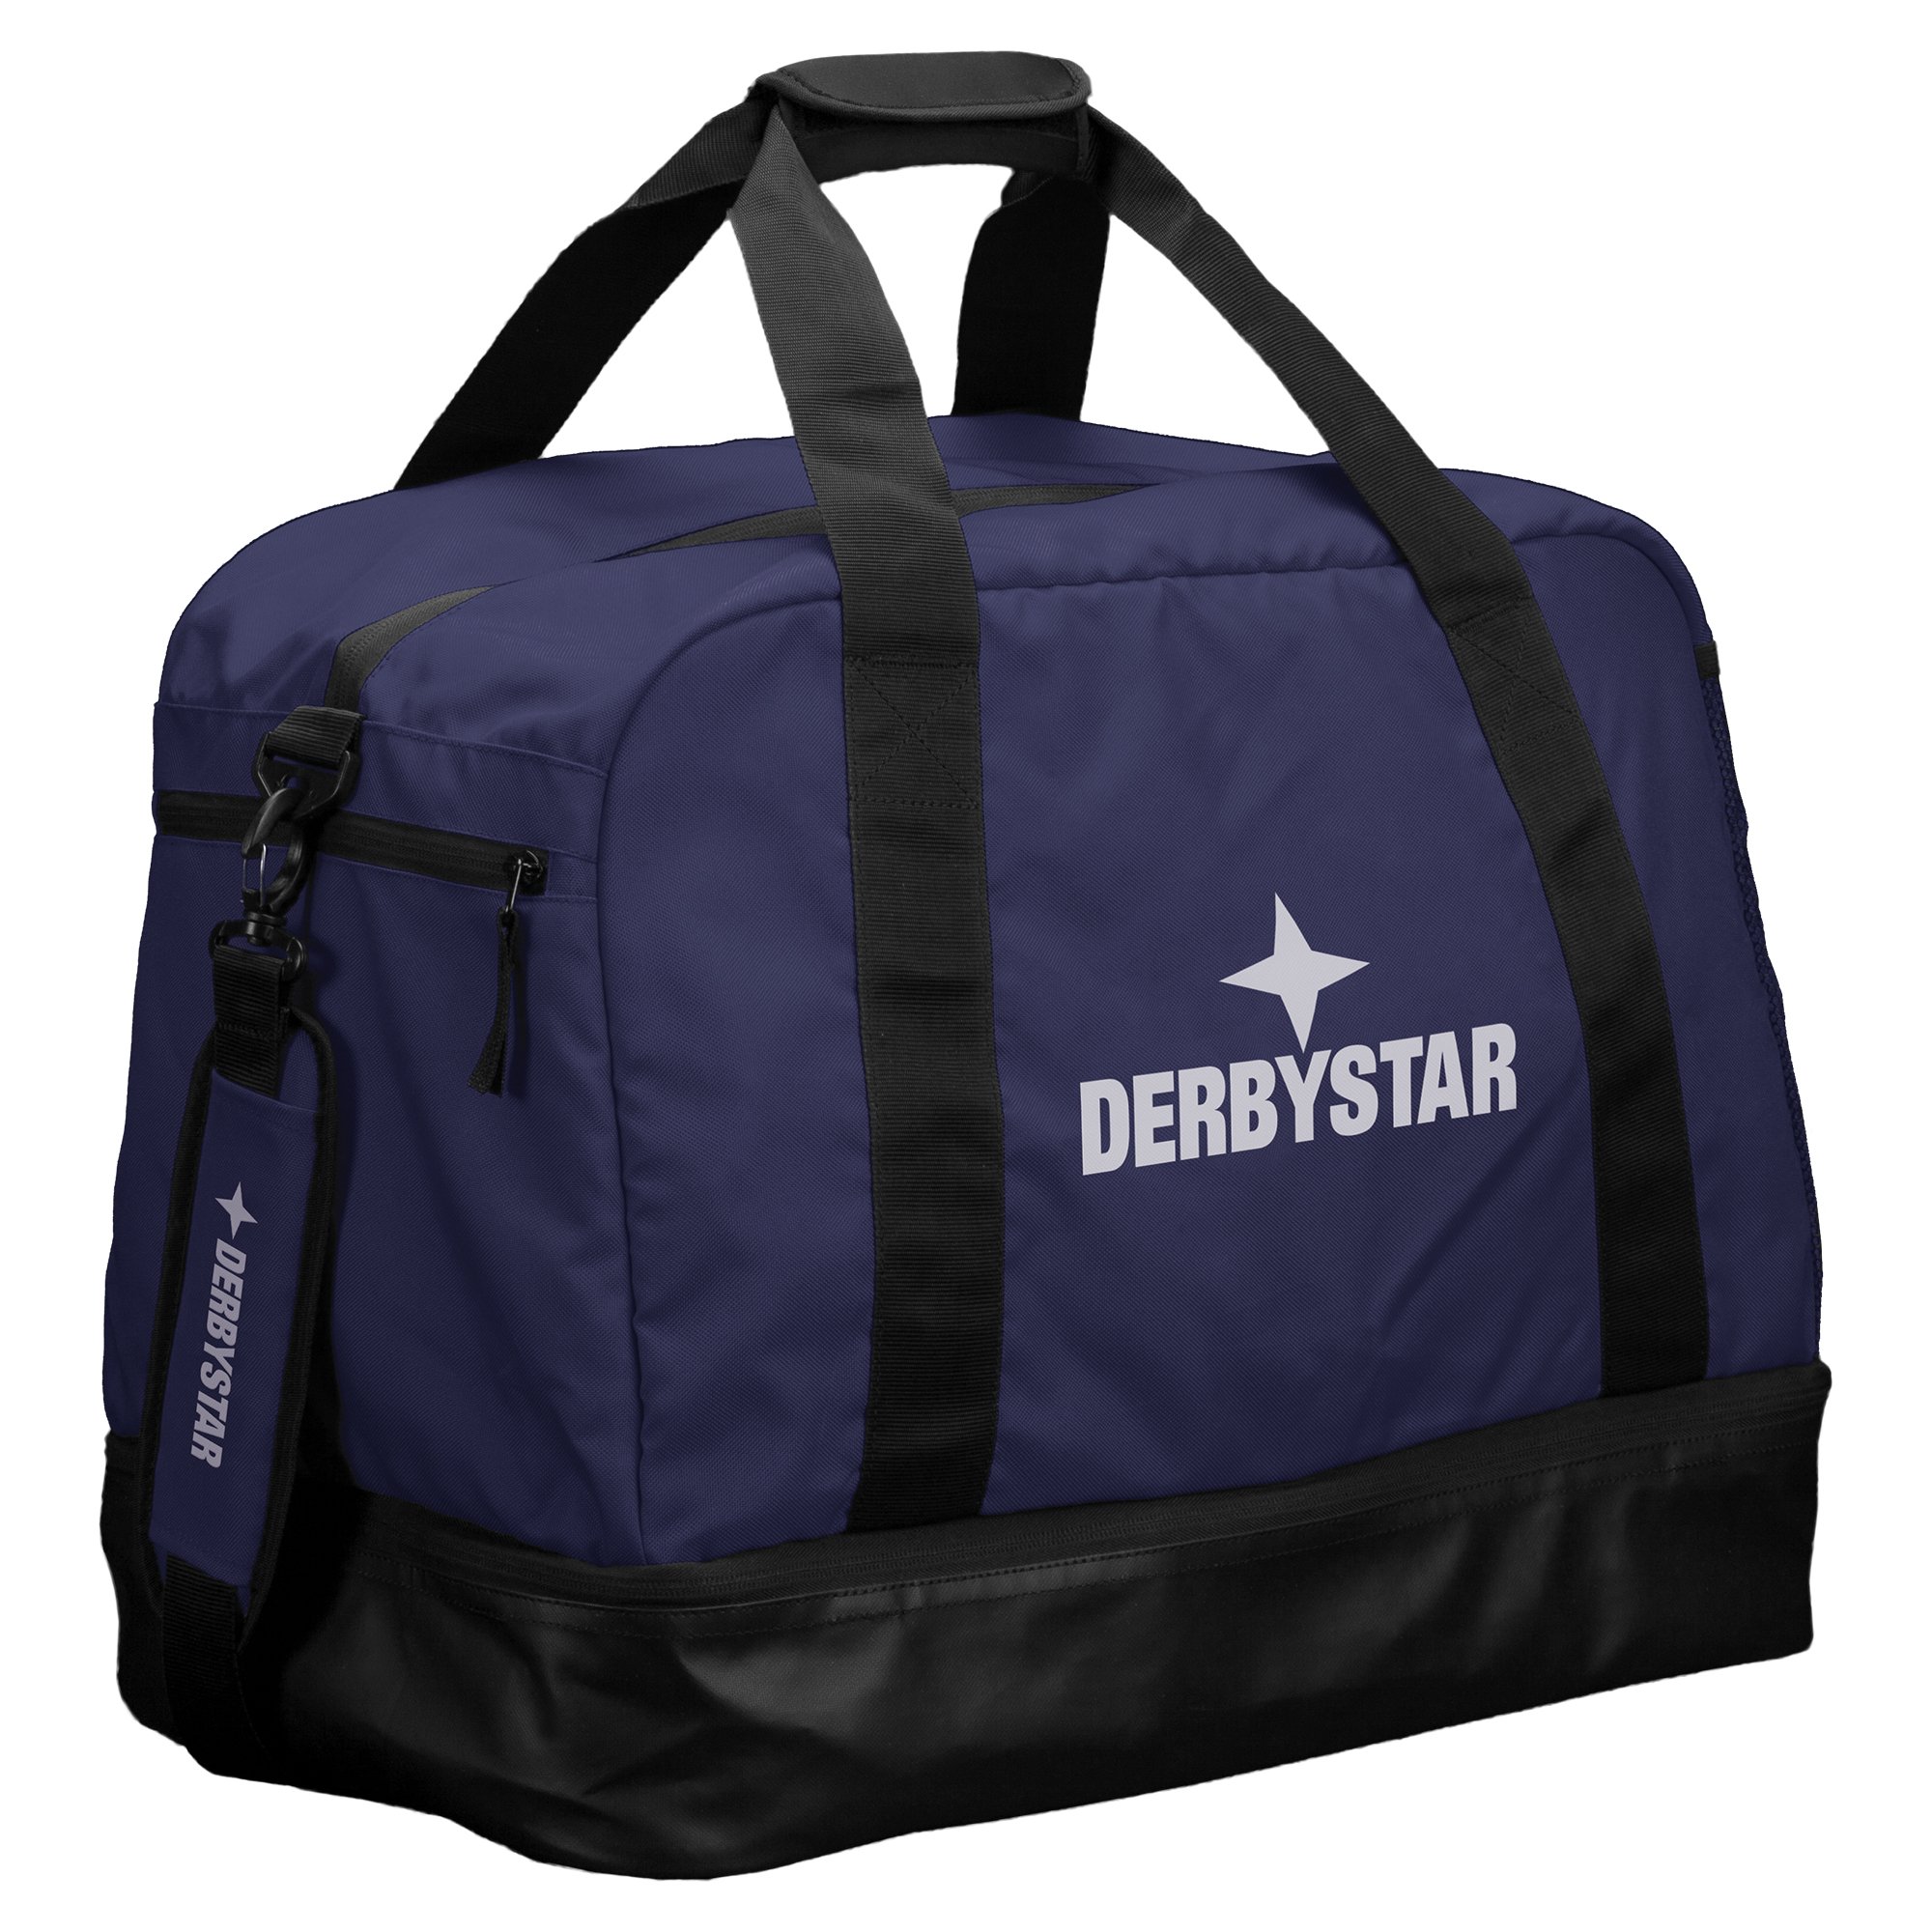 Derbystar Sporttasche Hyper Pro